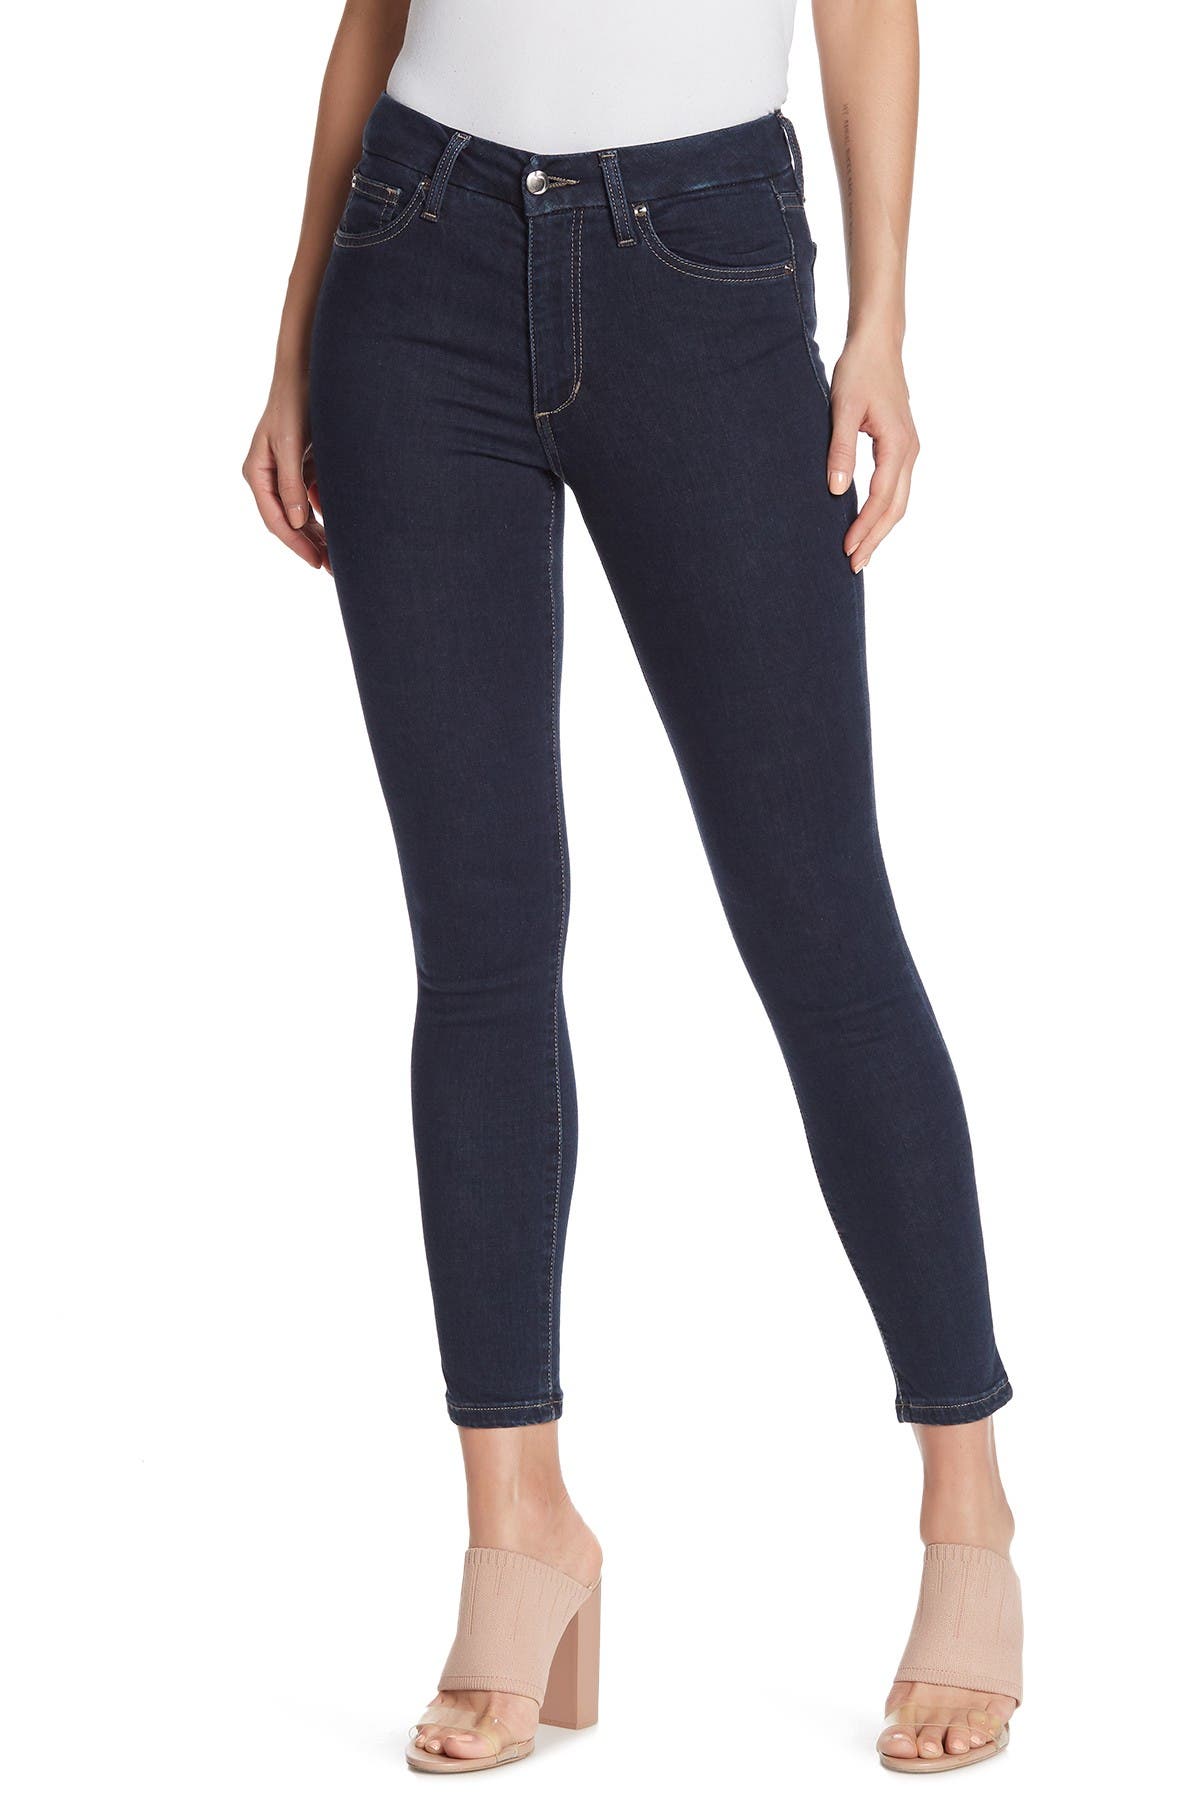 kevlar womens jeans